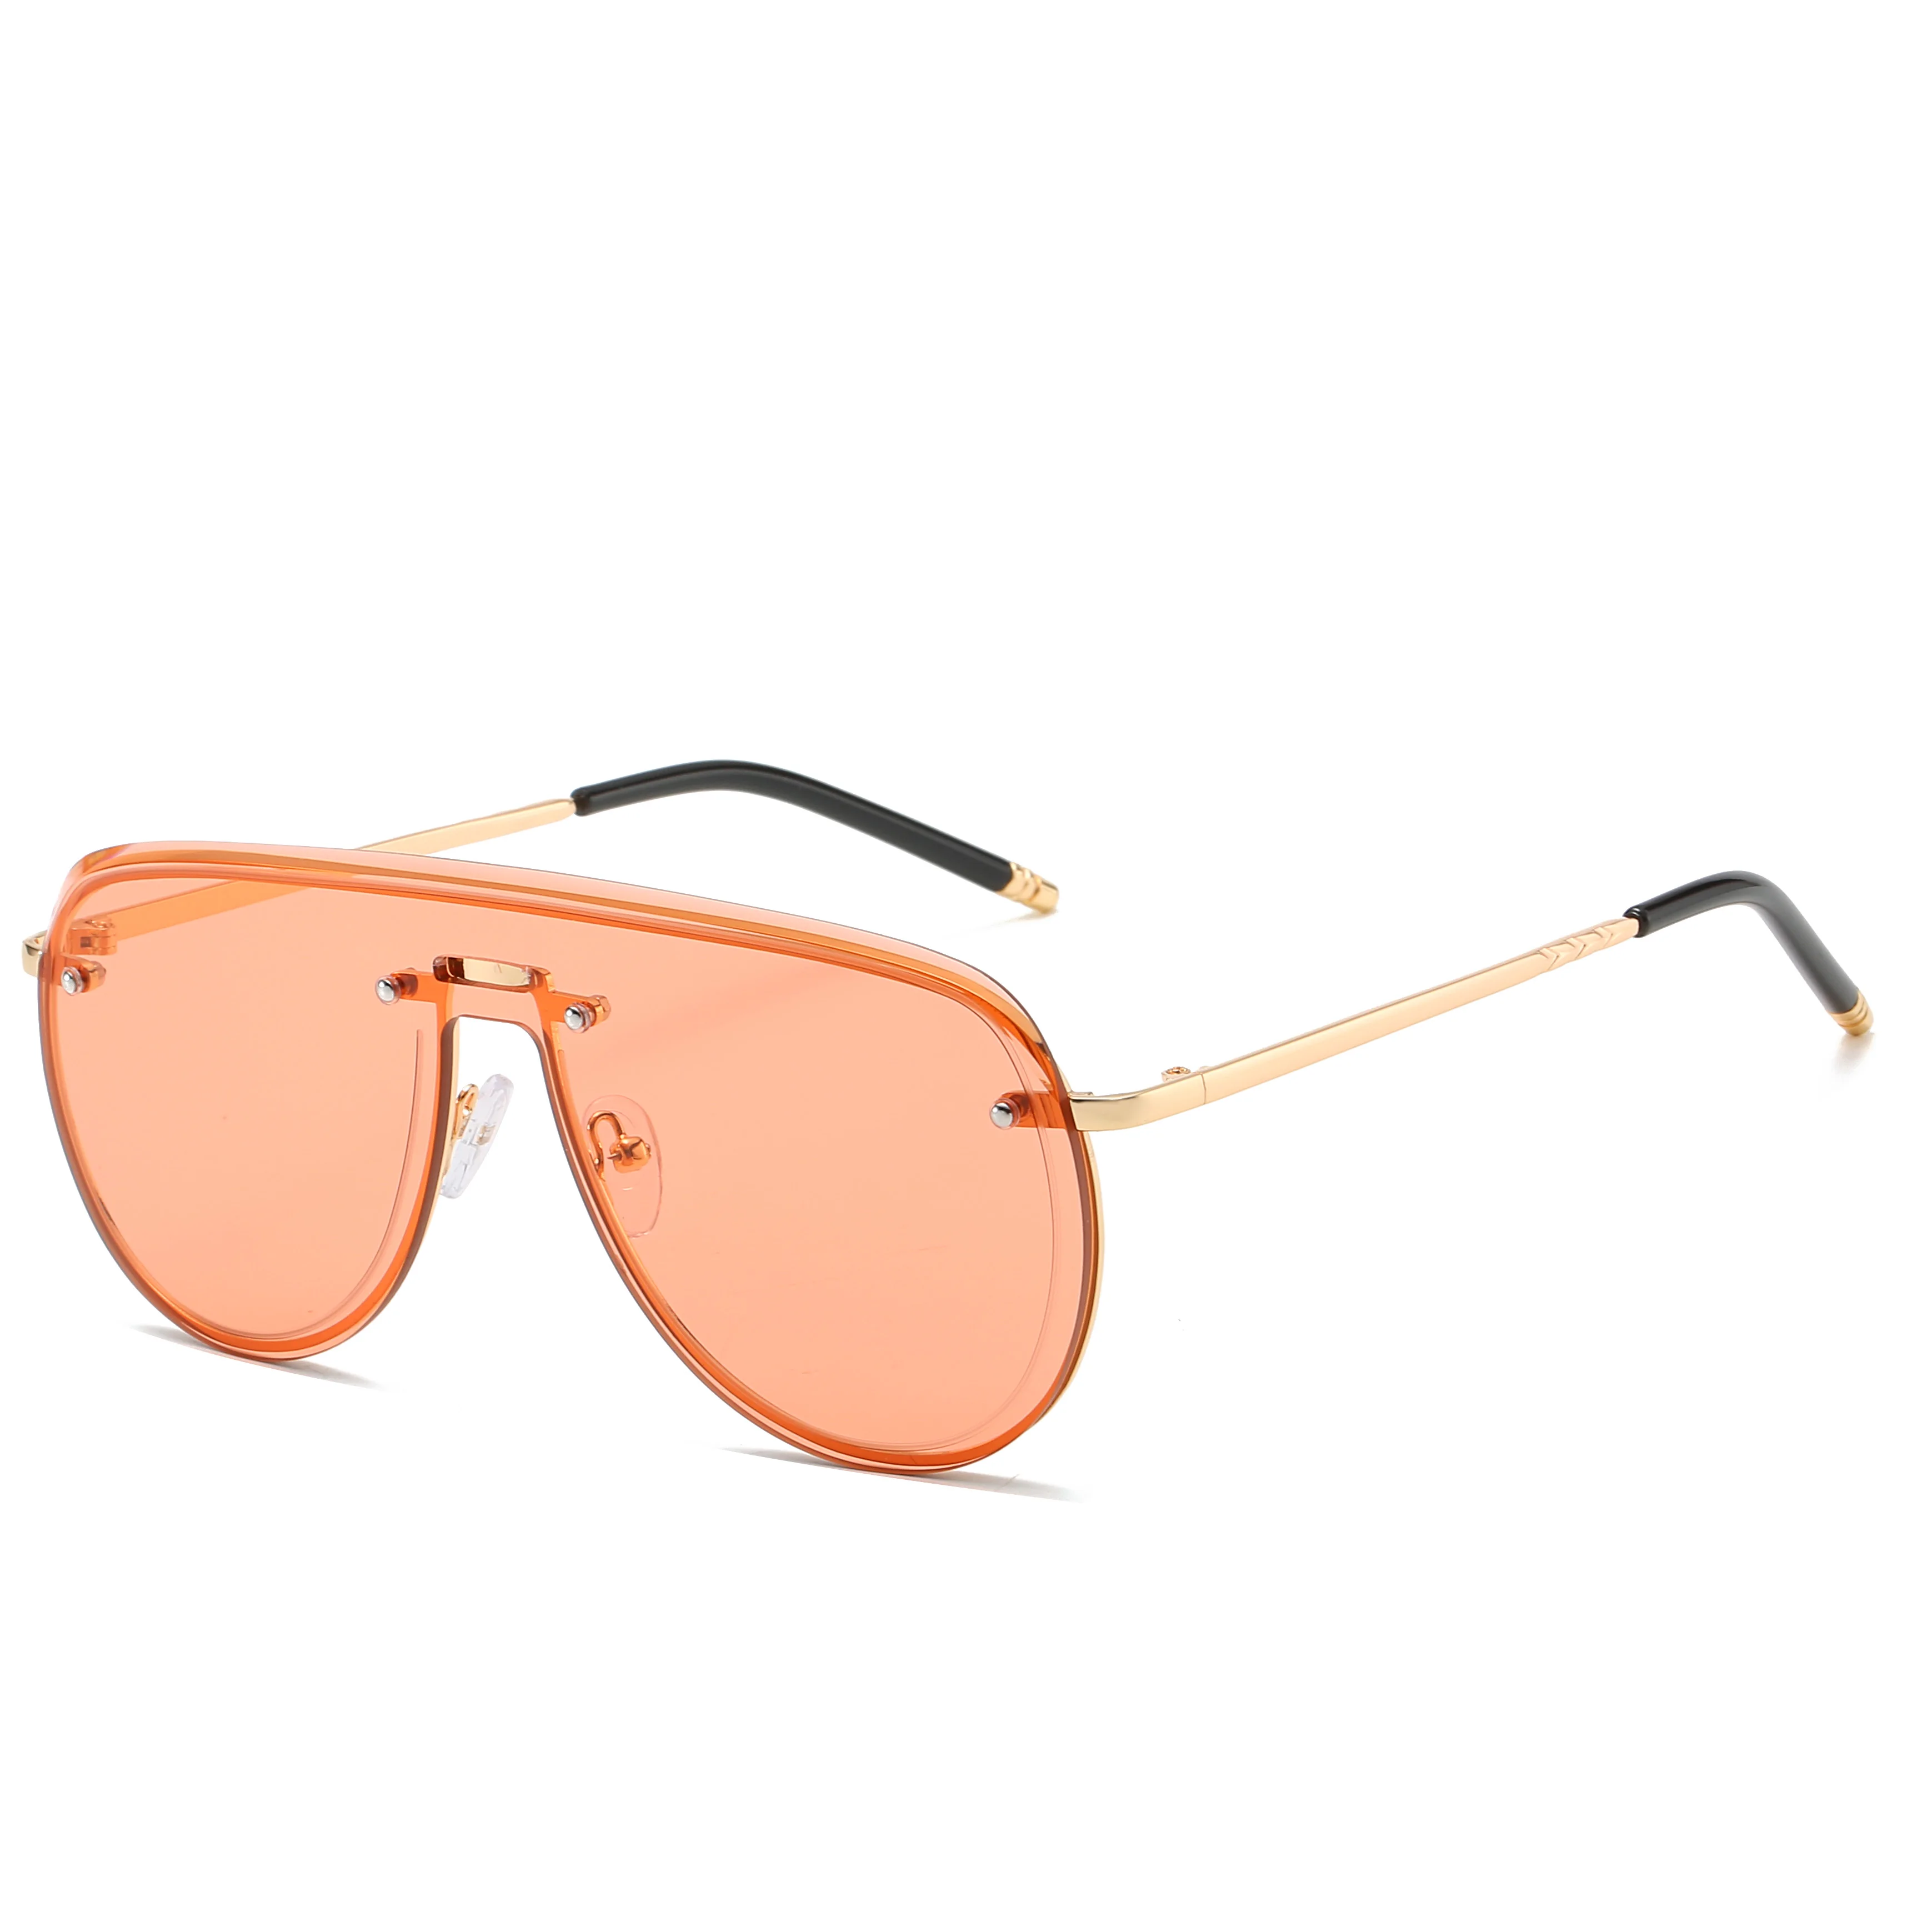 

Banei Sun Glasses Pilot Metal Custom Logo Oversized Shades Unisex Vintage 2020 New Arrivals Novelty Sunglasses Classic